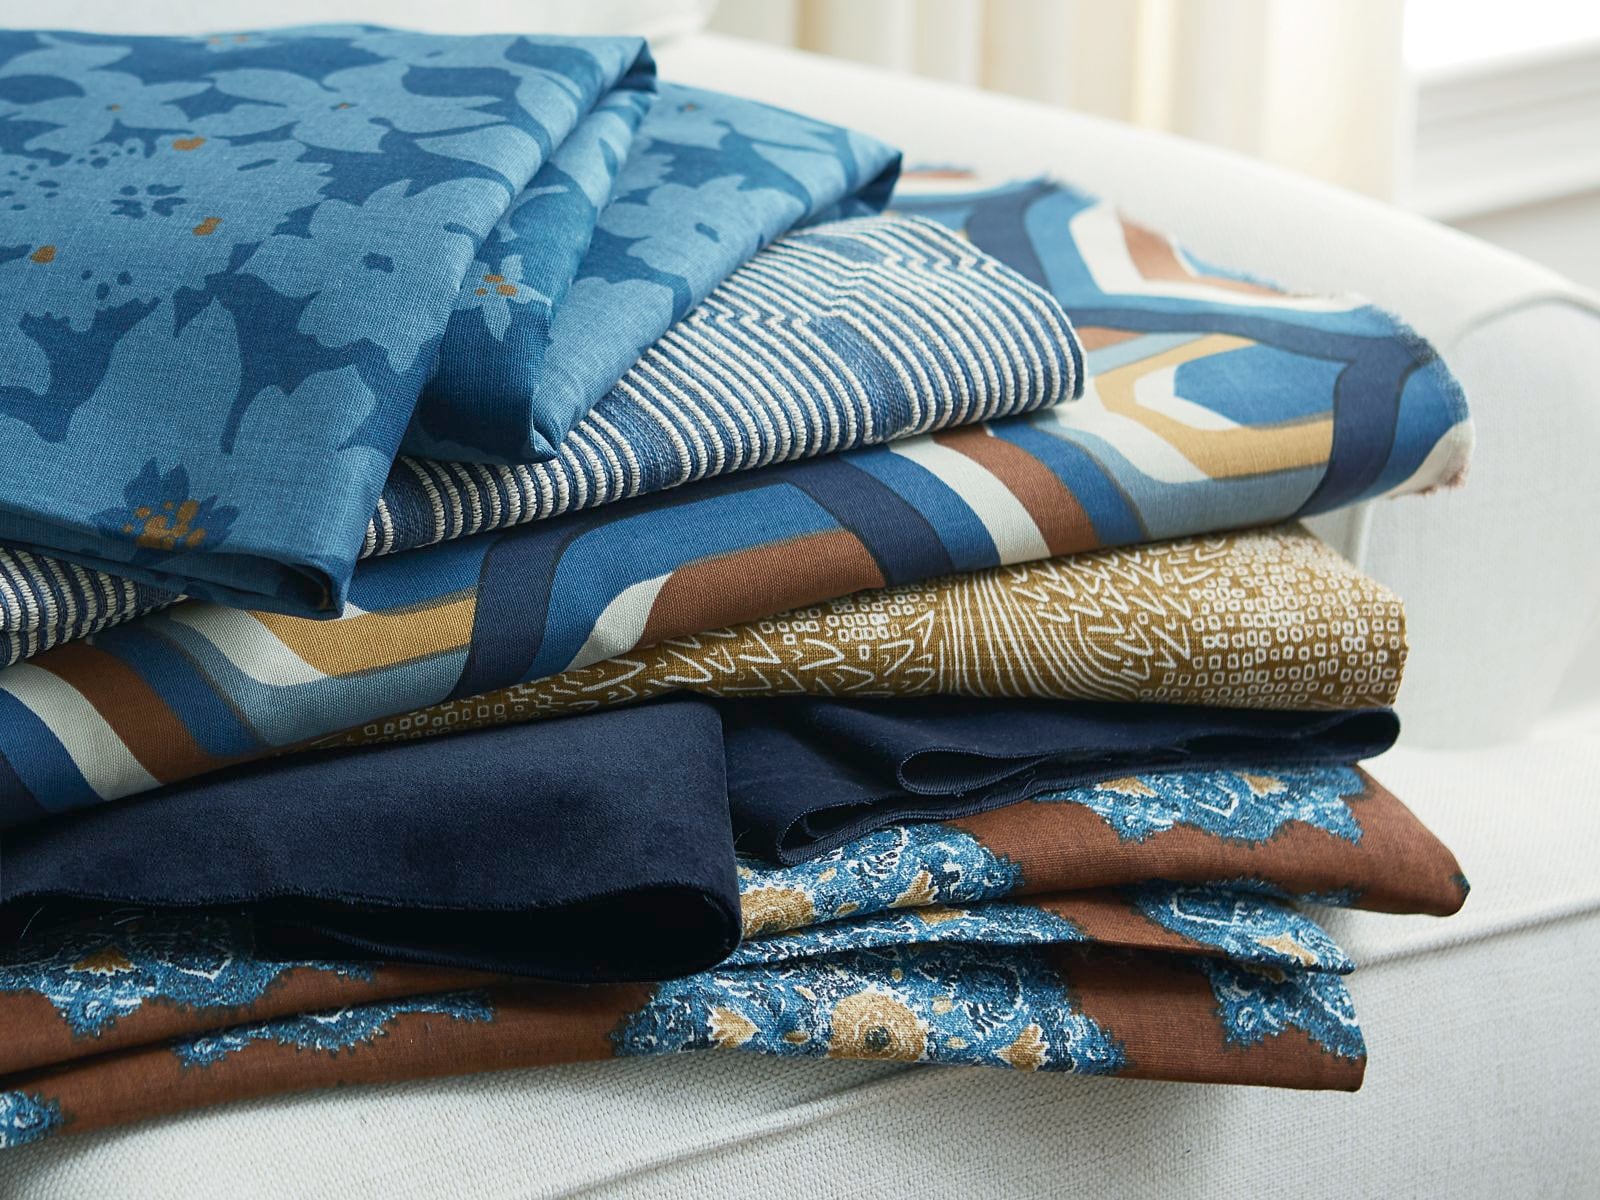 a stack of folded fabrics